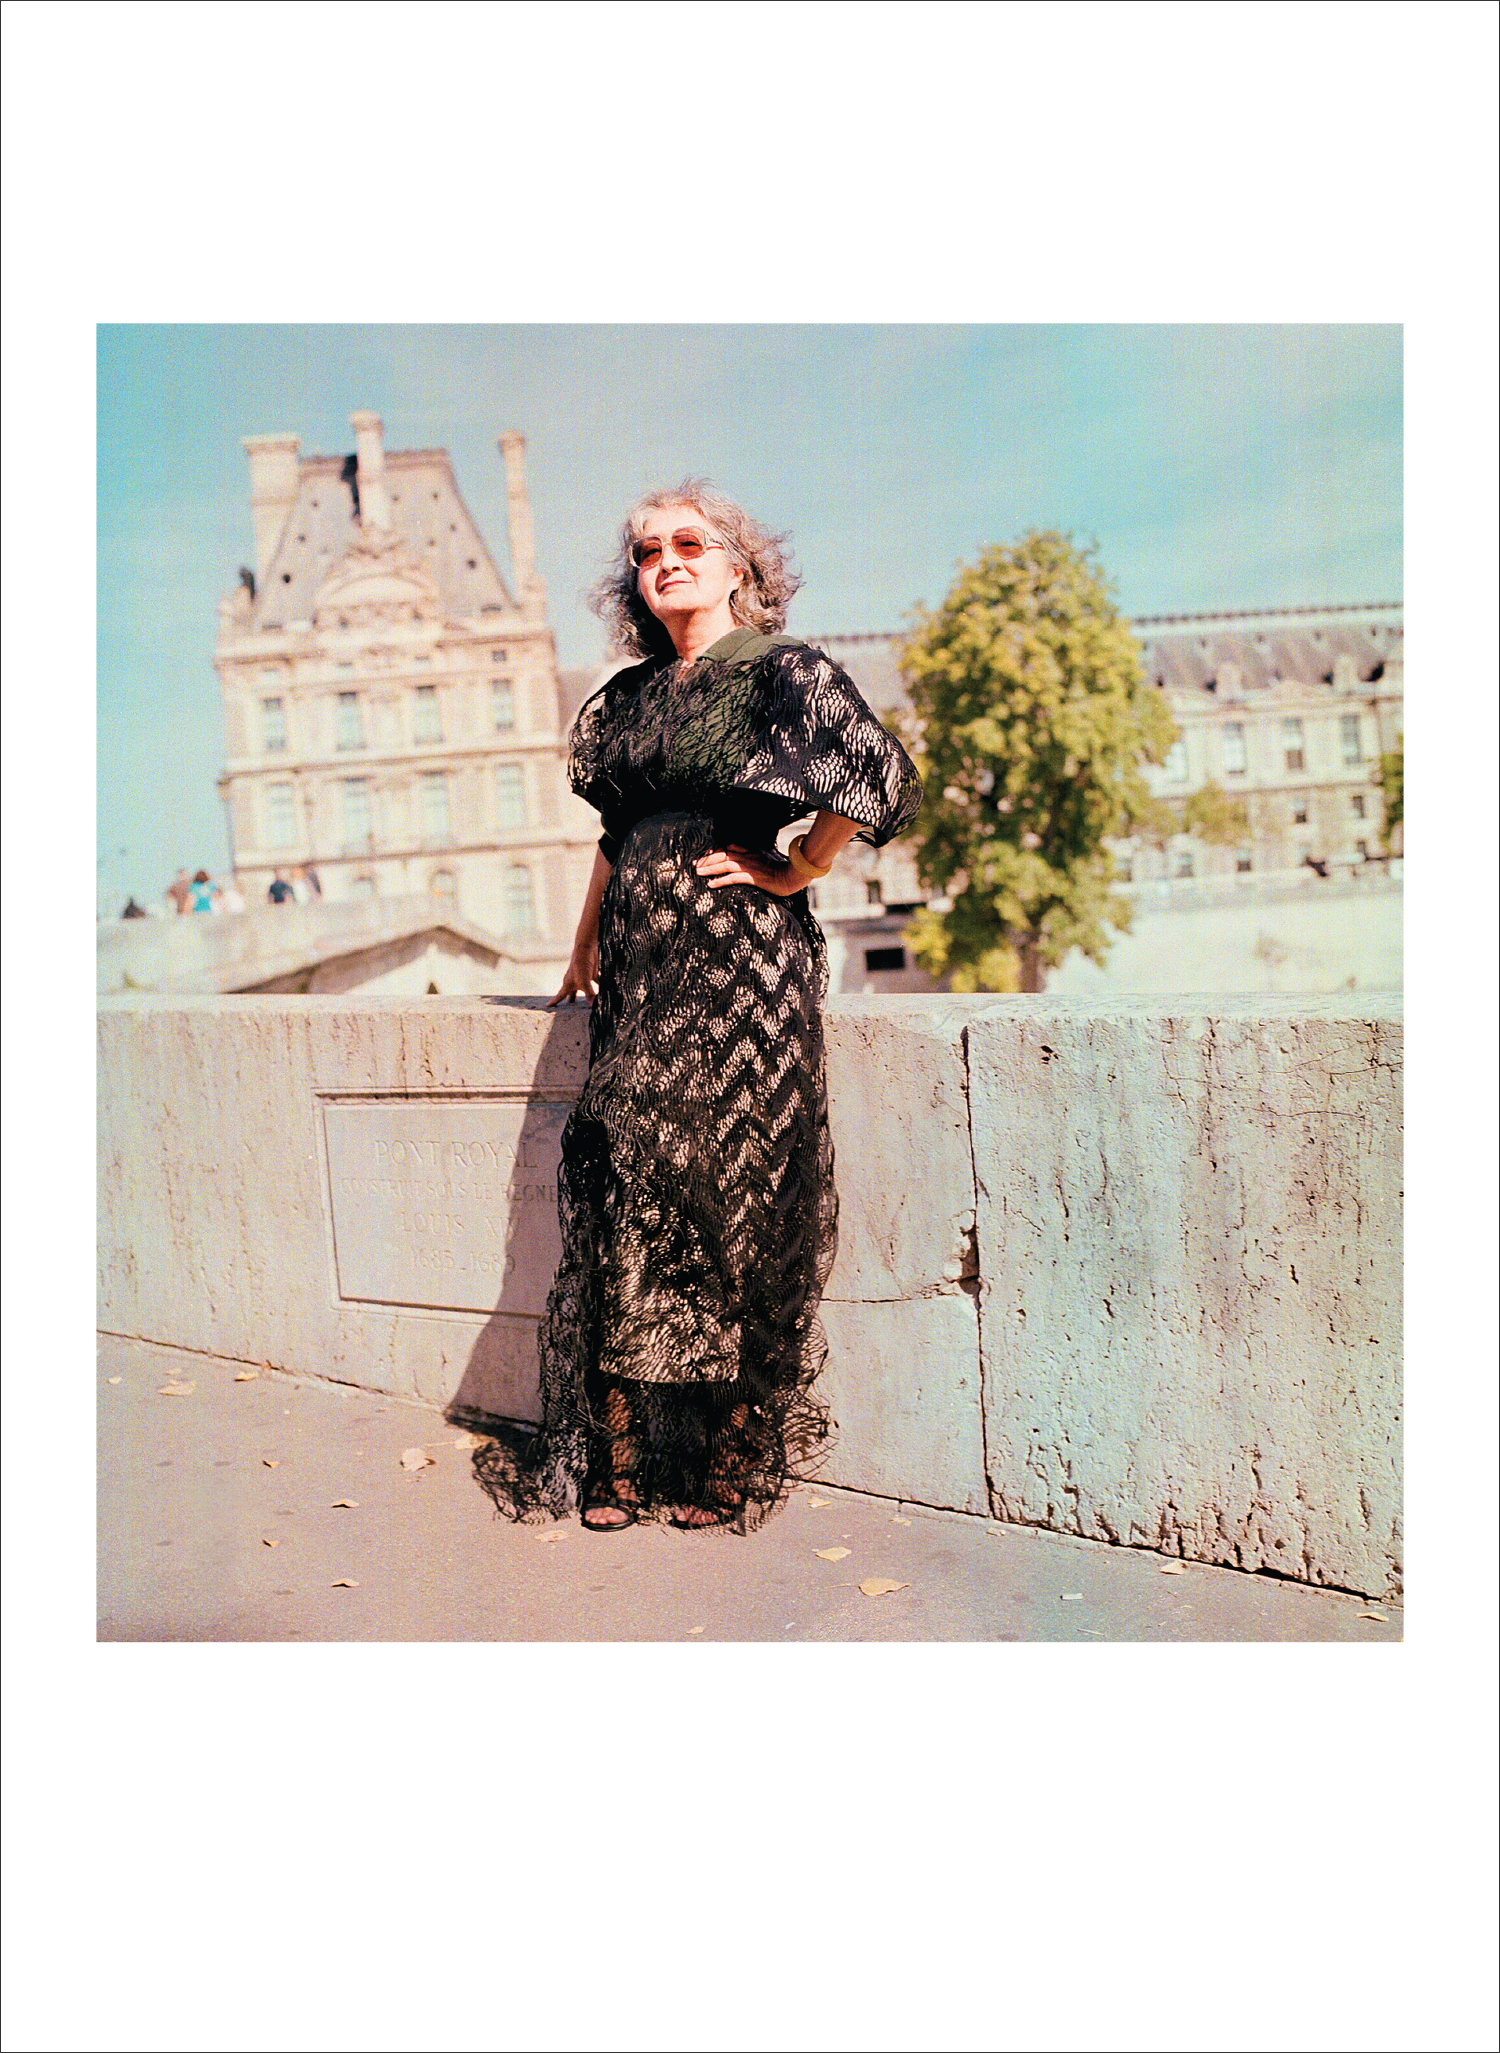 Vintage 1993 Iconic CHANEL PARIS Spelled White Sunglasses 